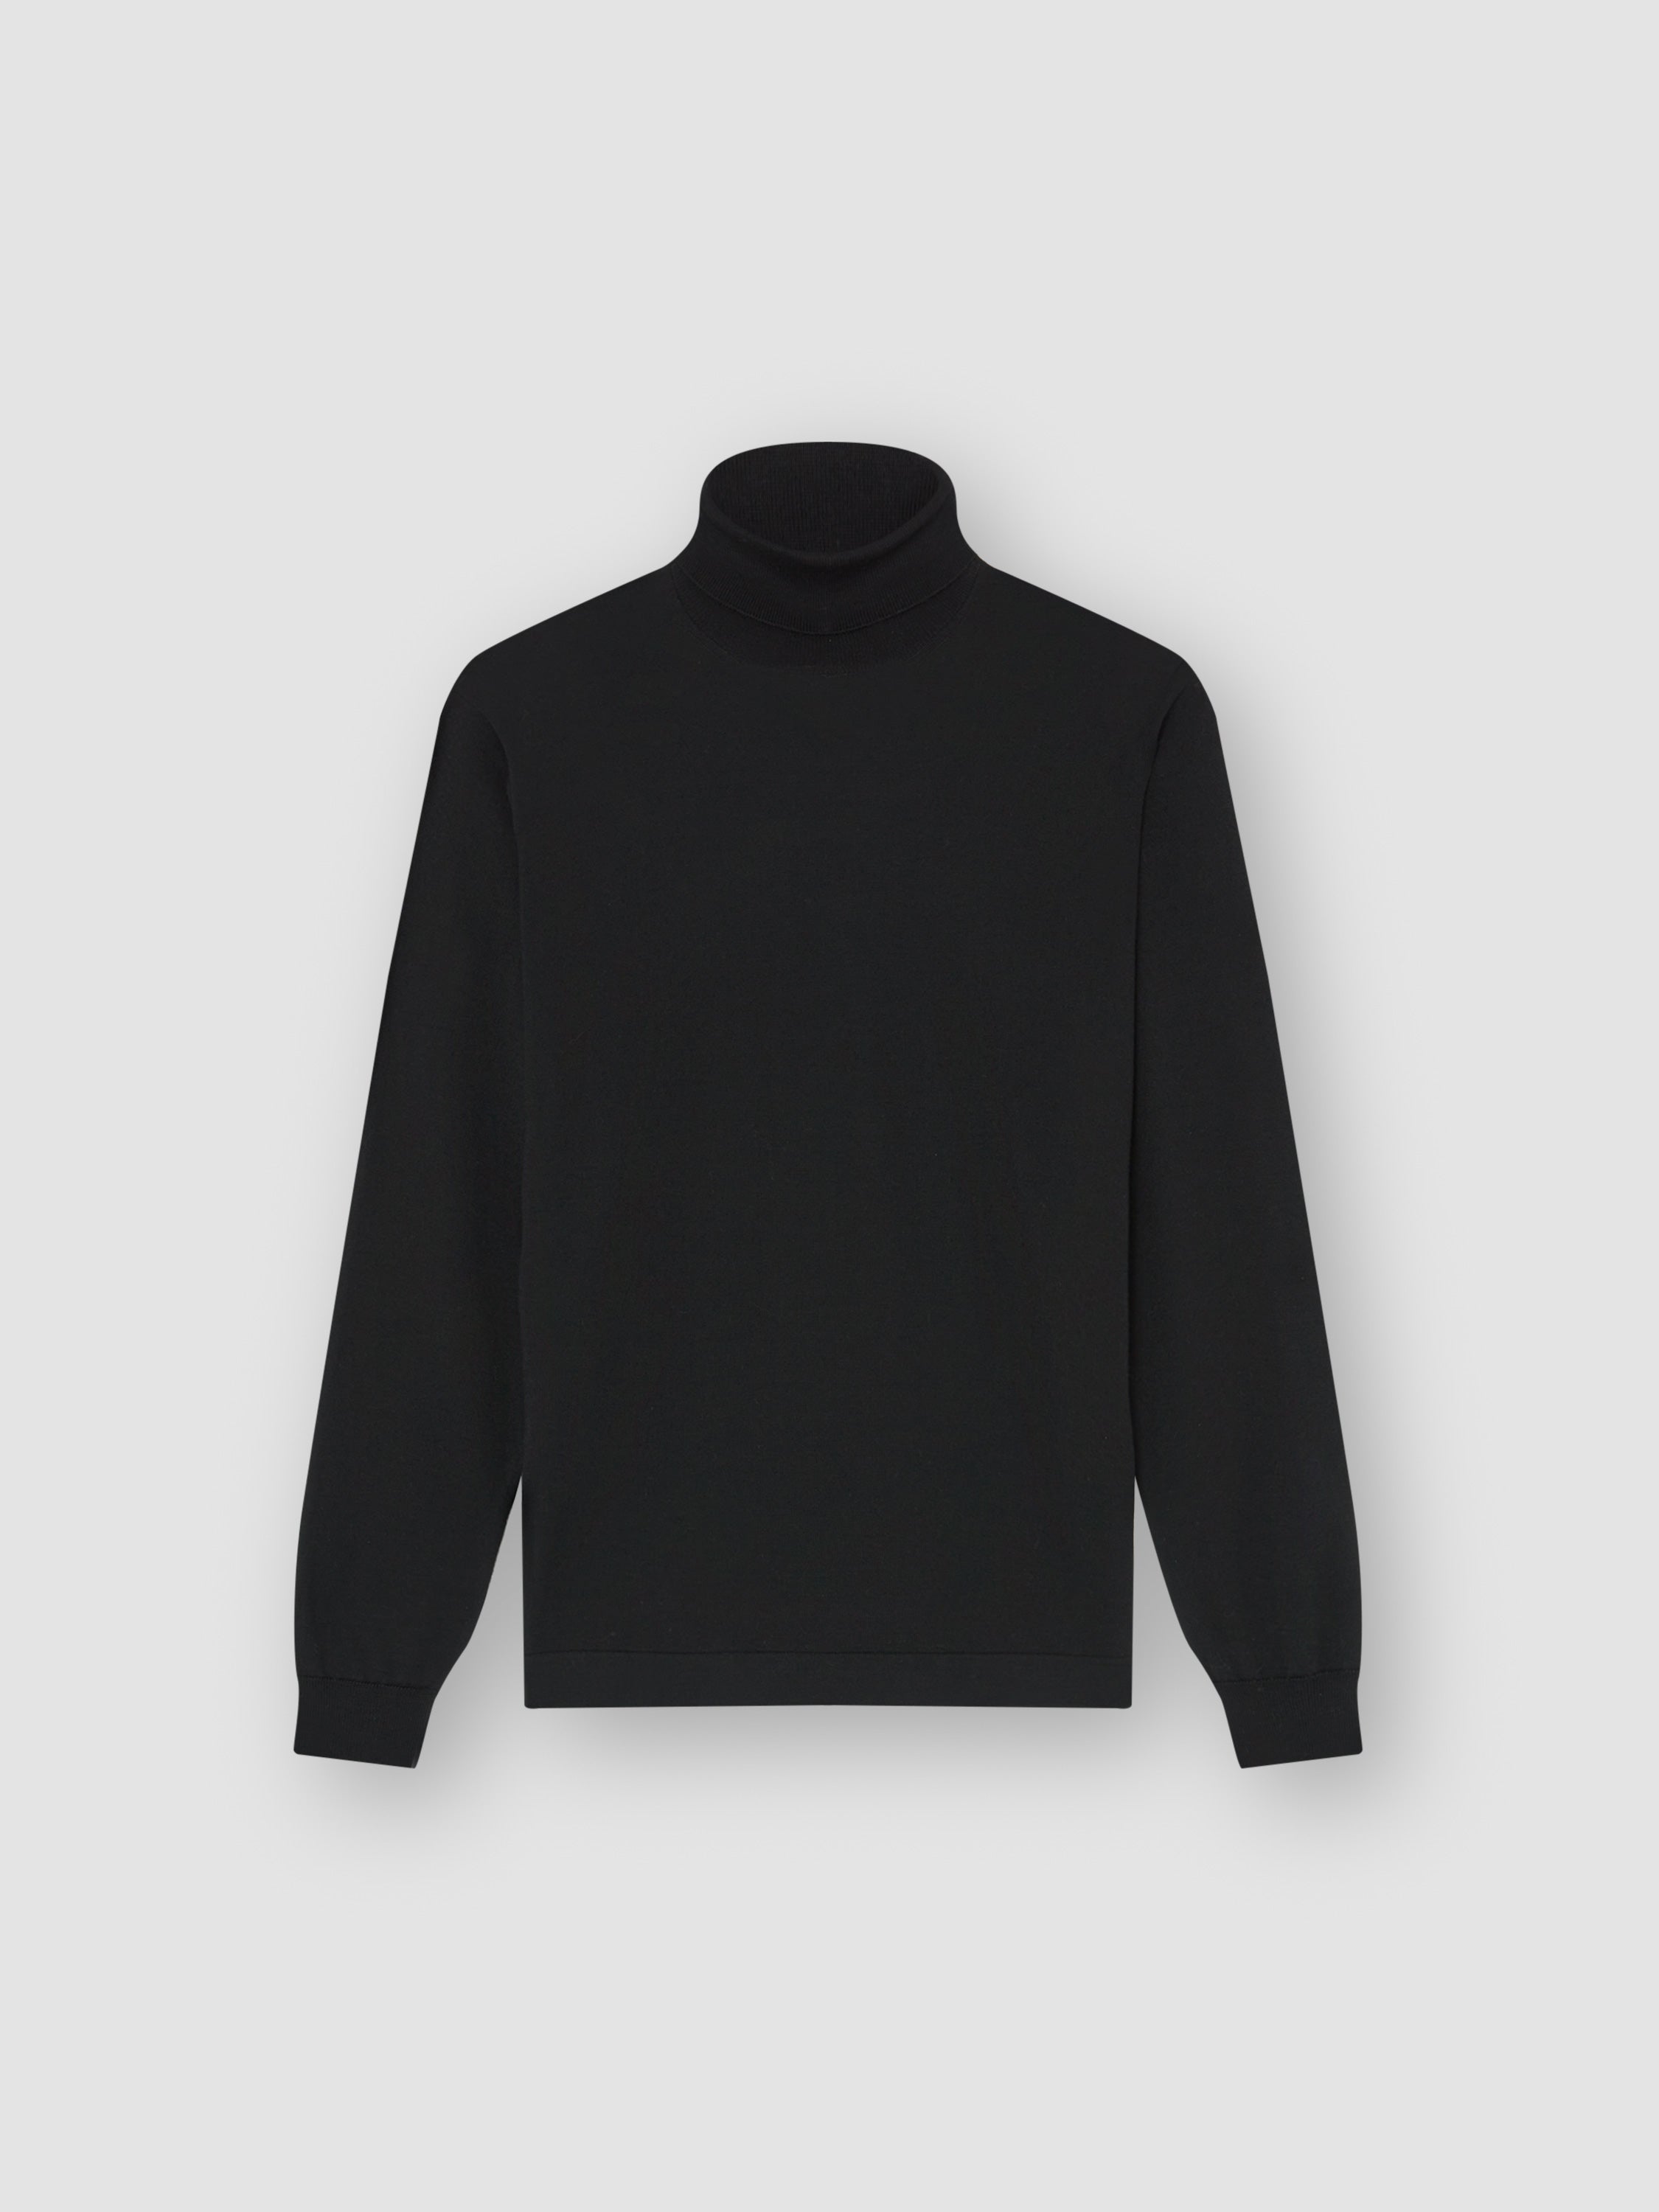 Merino Wool Extrafine Roll Neck Sweater Black Product Image